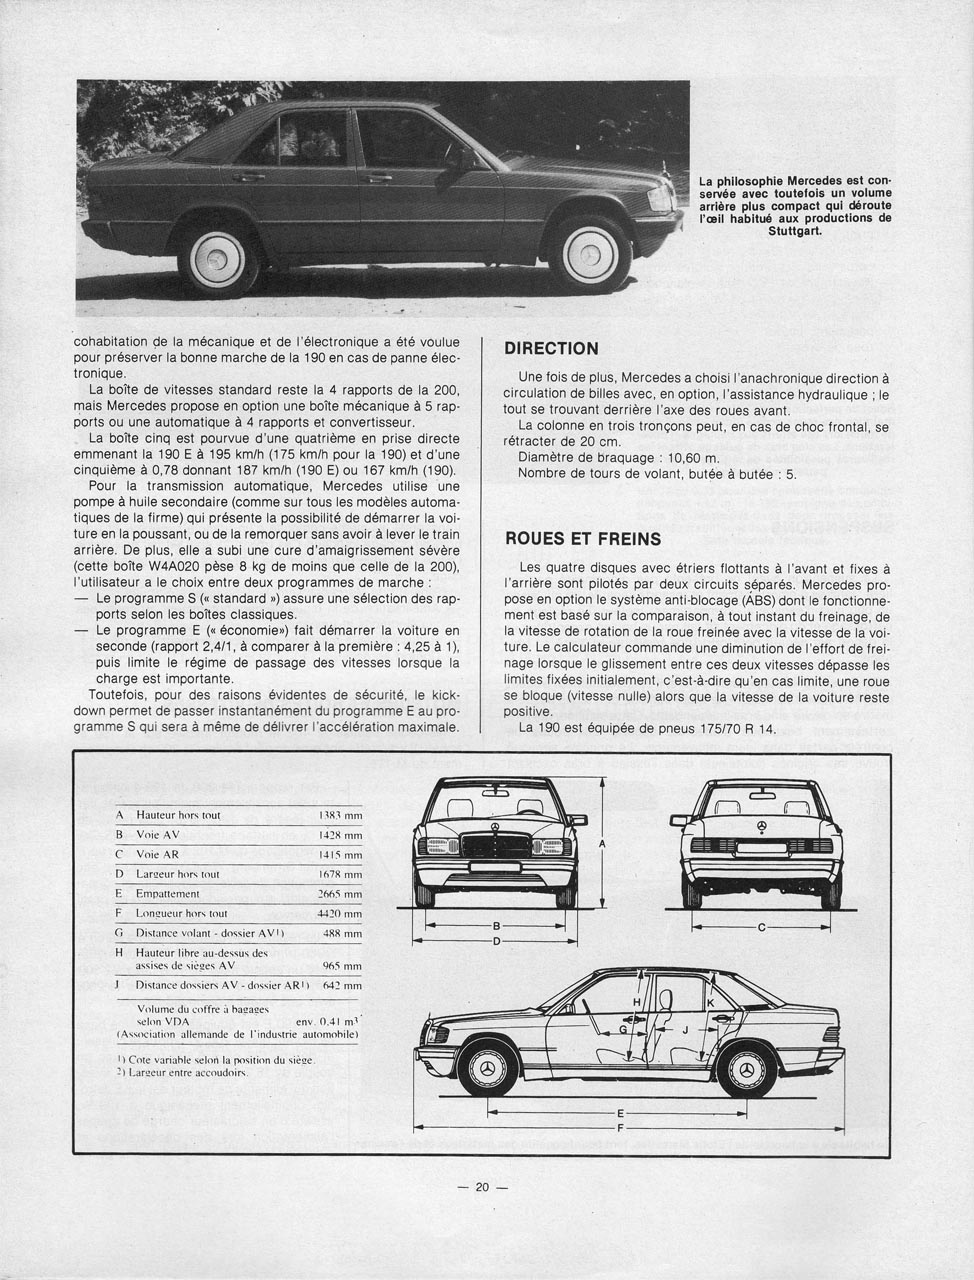 W201 - Une vraie petite Mercedes - Page 2 RTC_92_1984_W201-3